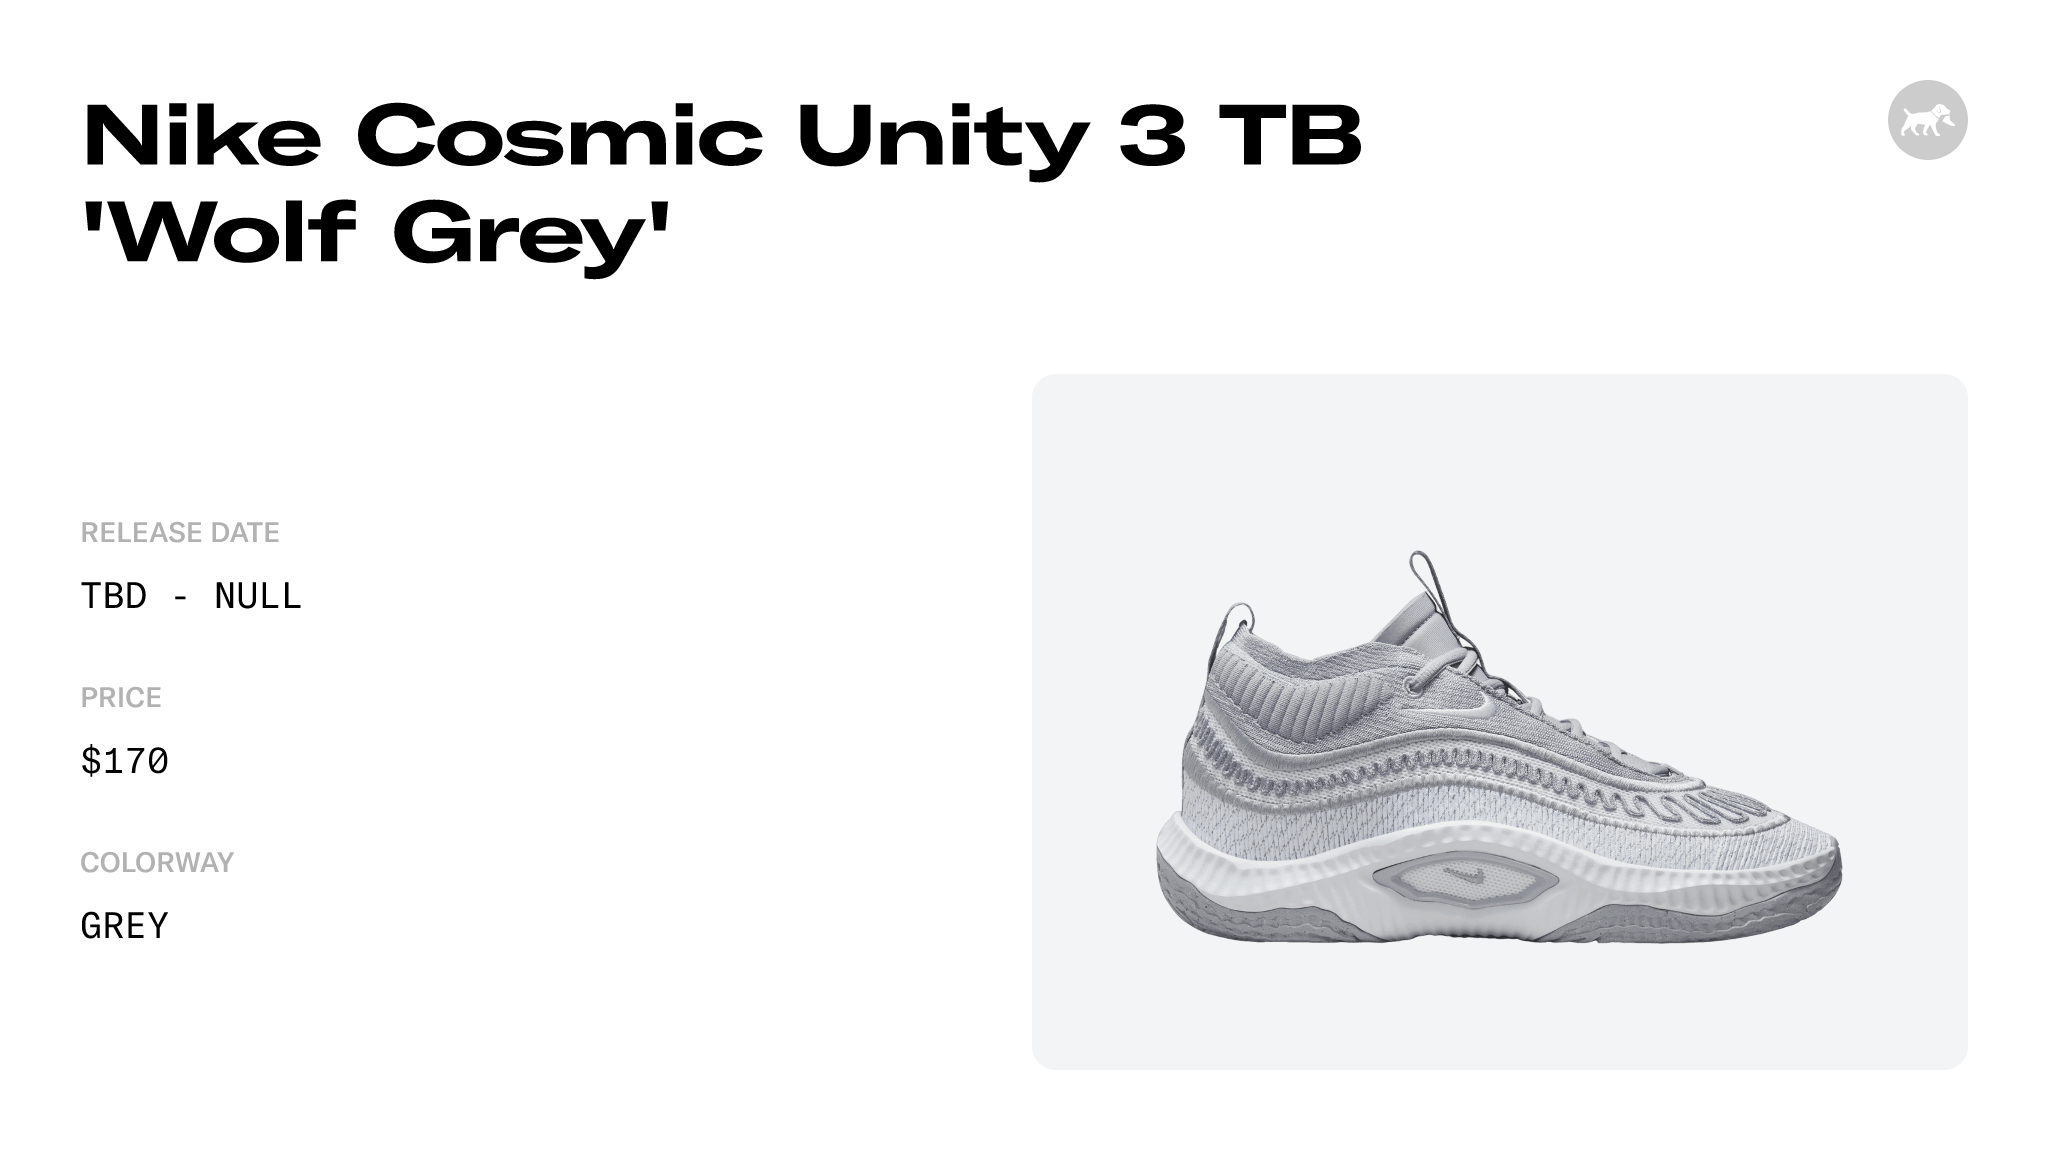 Nike Cosmic Unity 3 TB 'Wolf Grey' - DZ2906-001 Raffles and Release Date